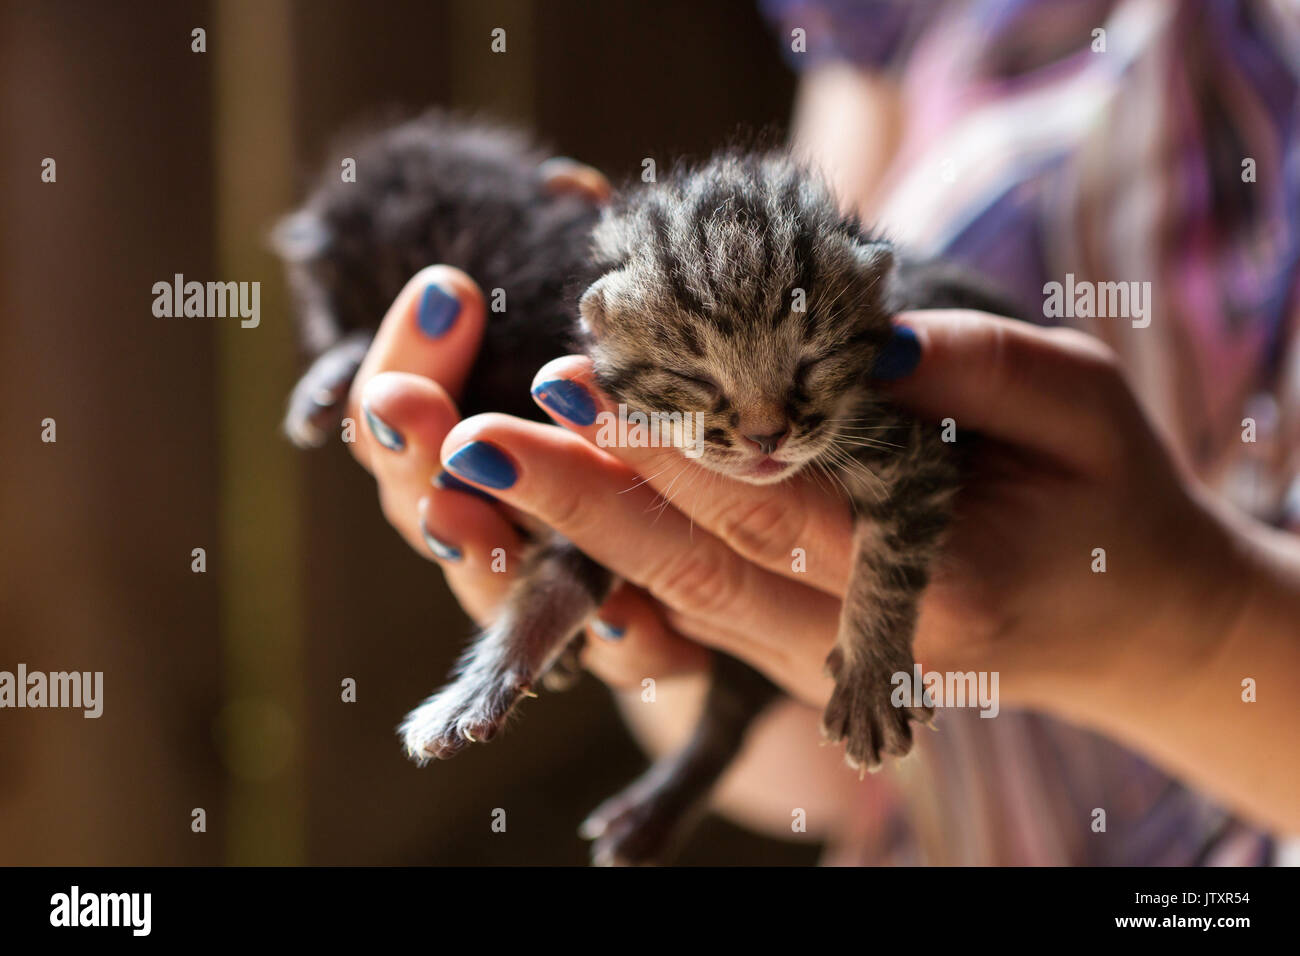 Two newborn kittens on human hands Stock Photo